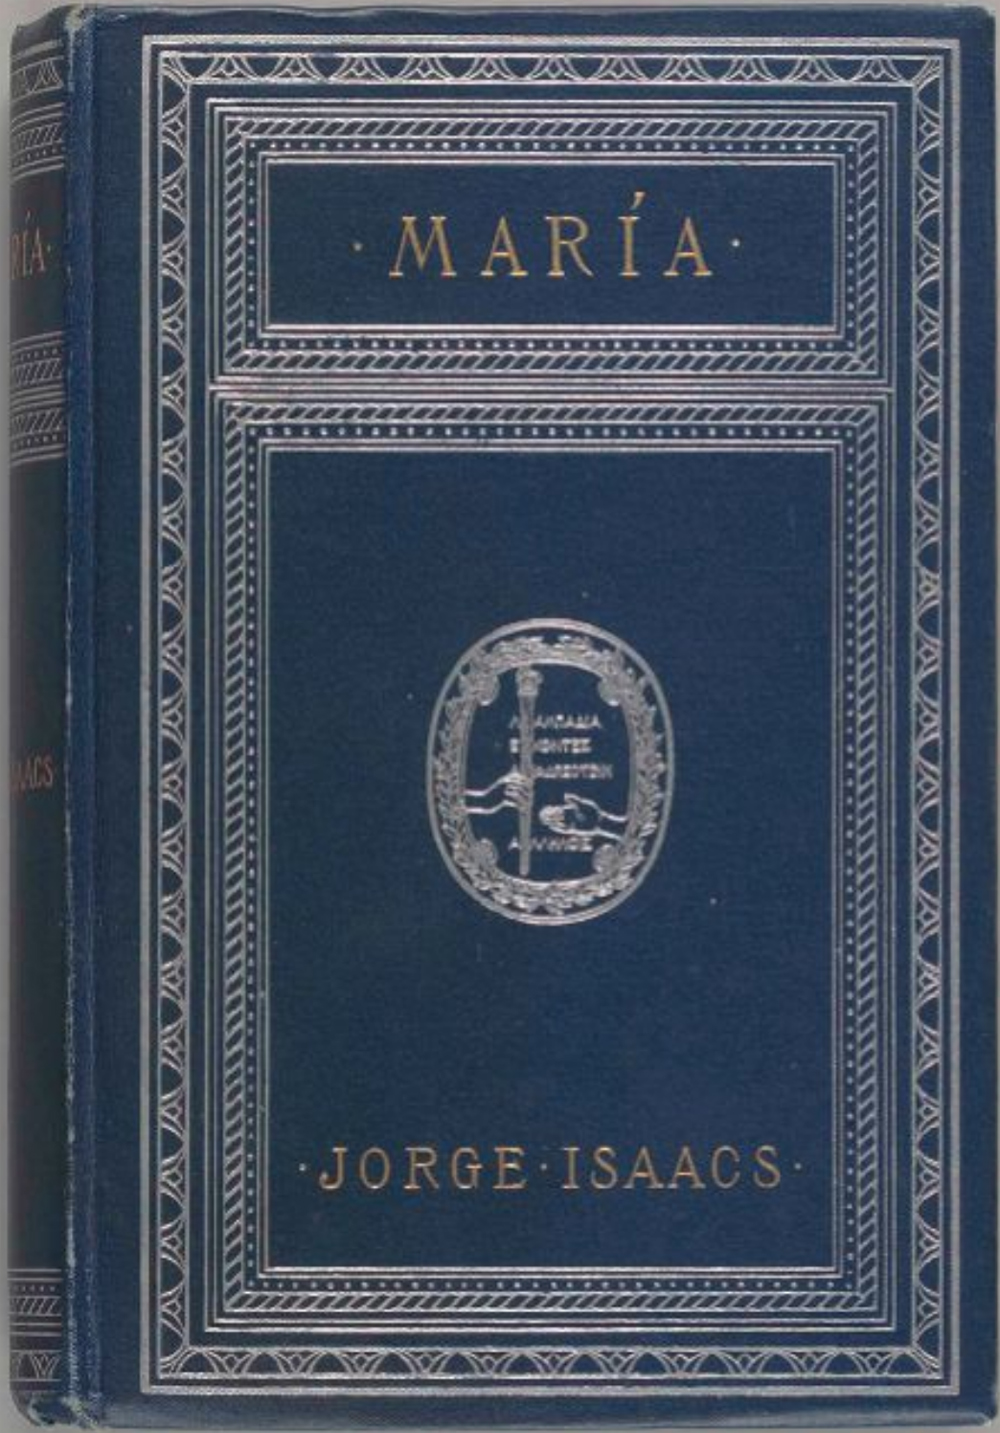 María, A South American Romance by Jorge Isaacs